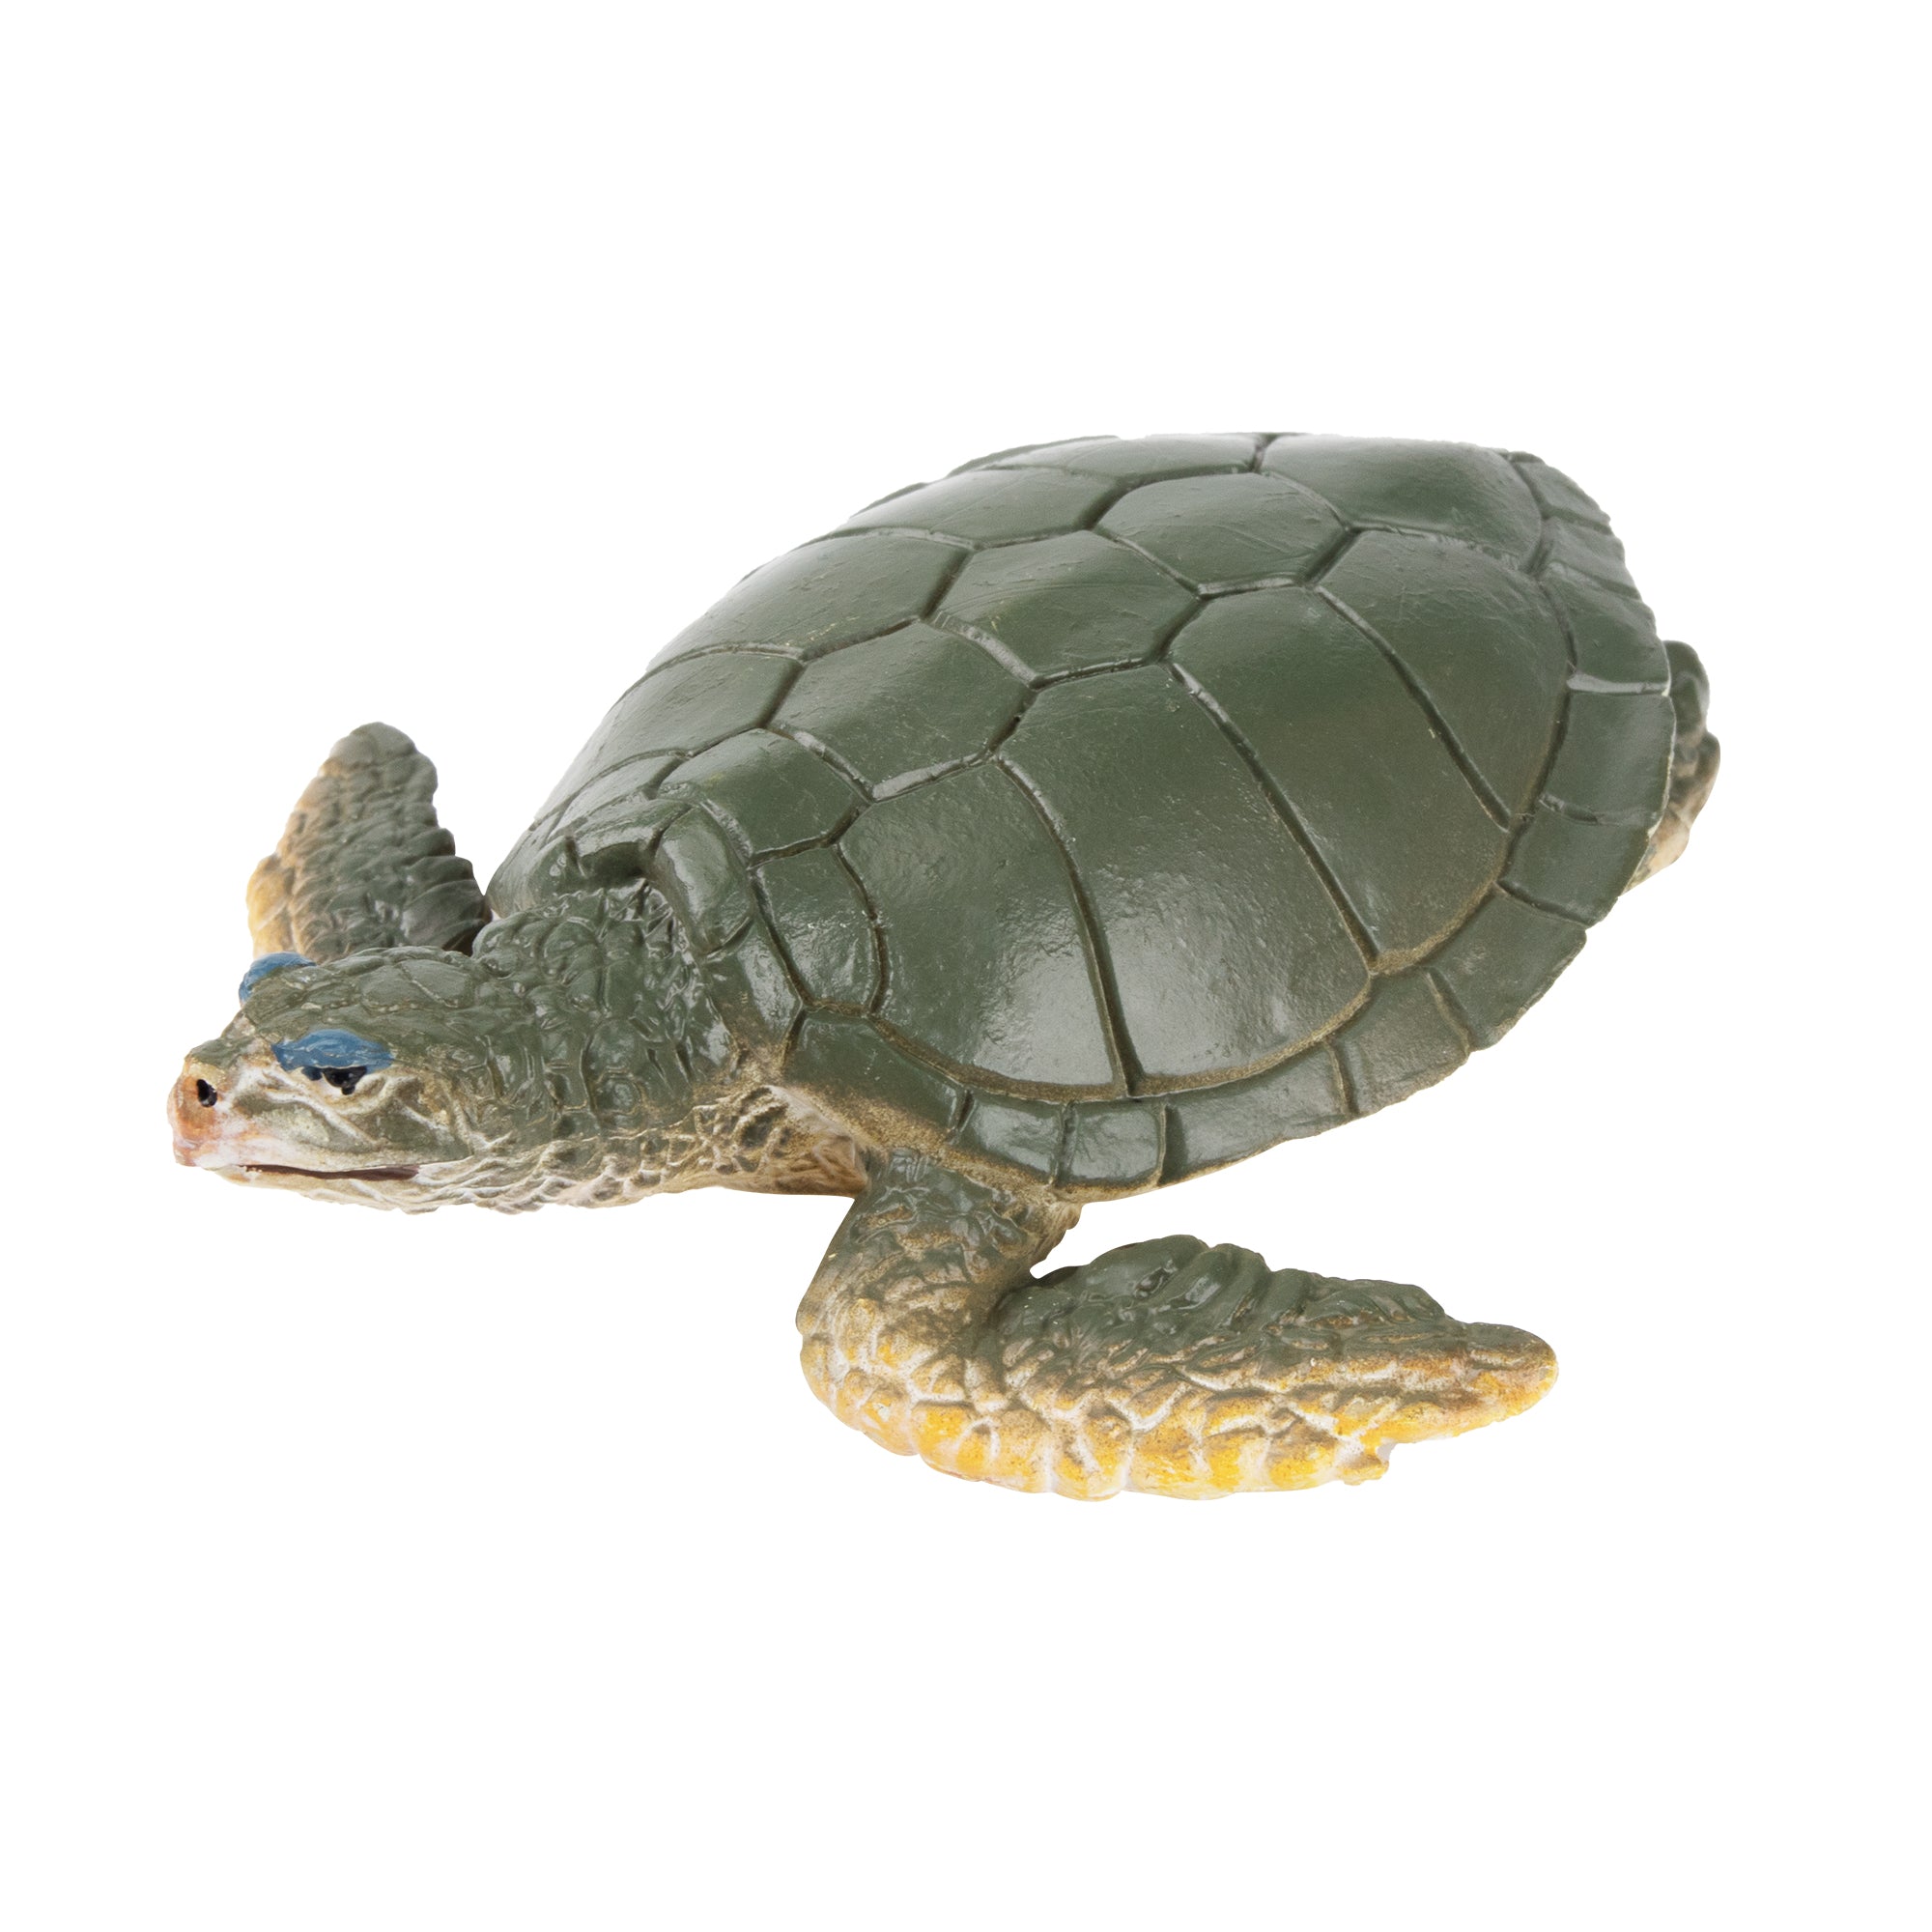 Toymany Walking Kemp's Ridley Sea Turtle Figurine Toy-2